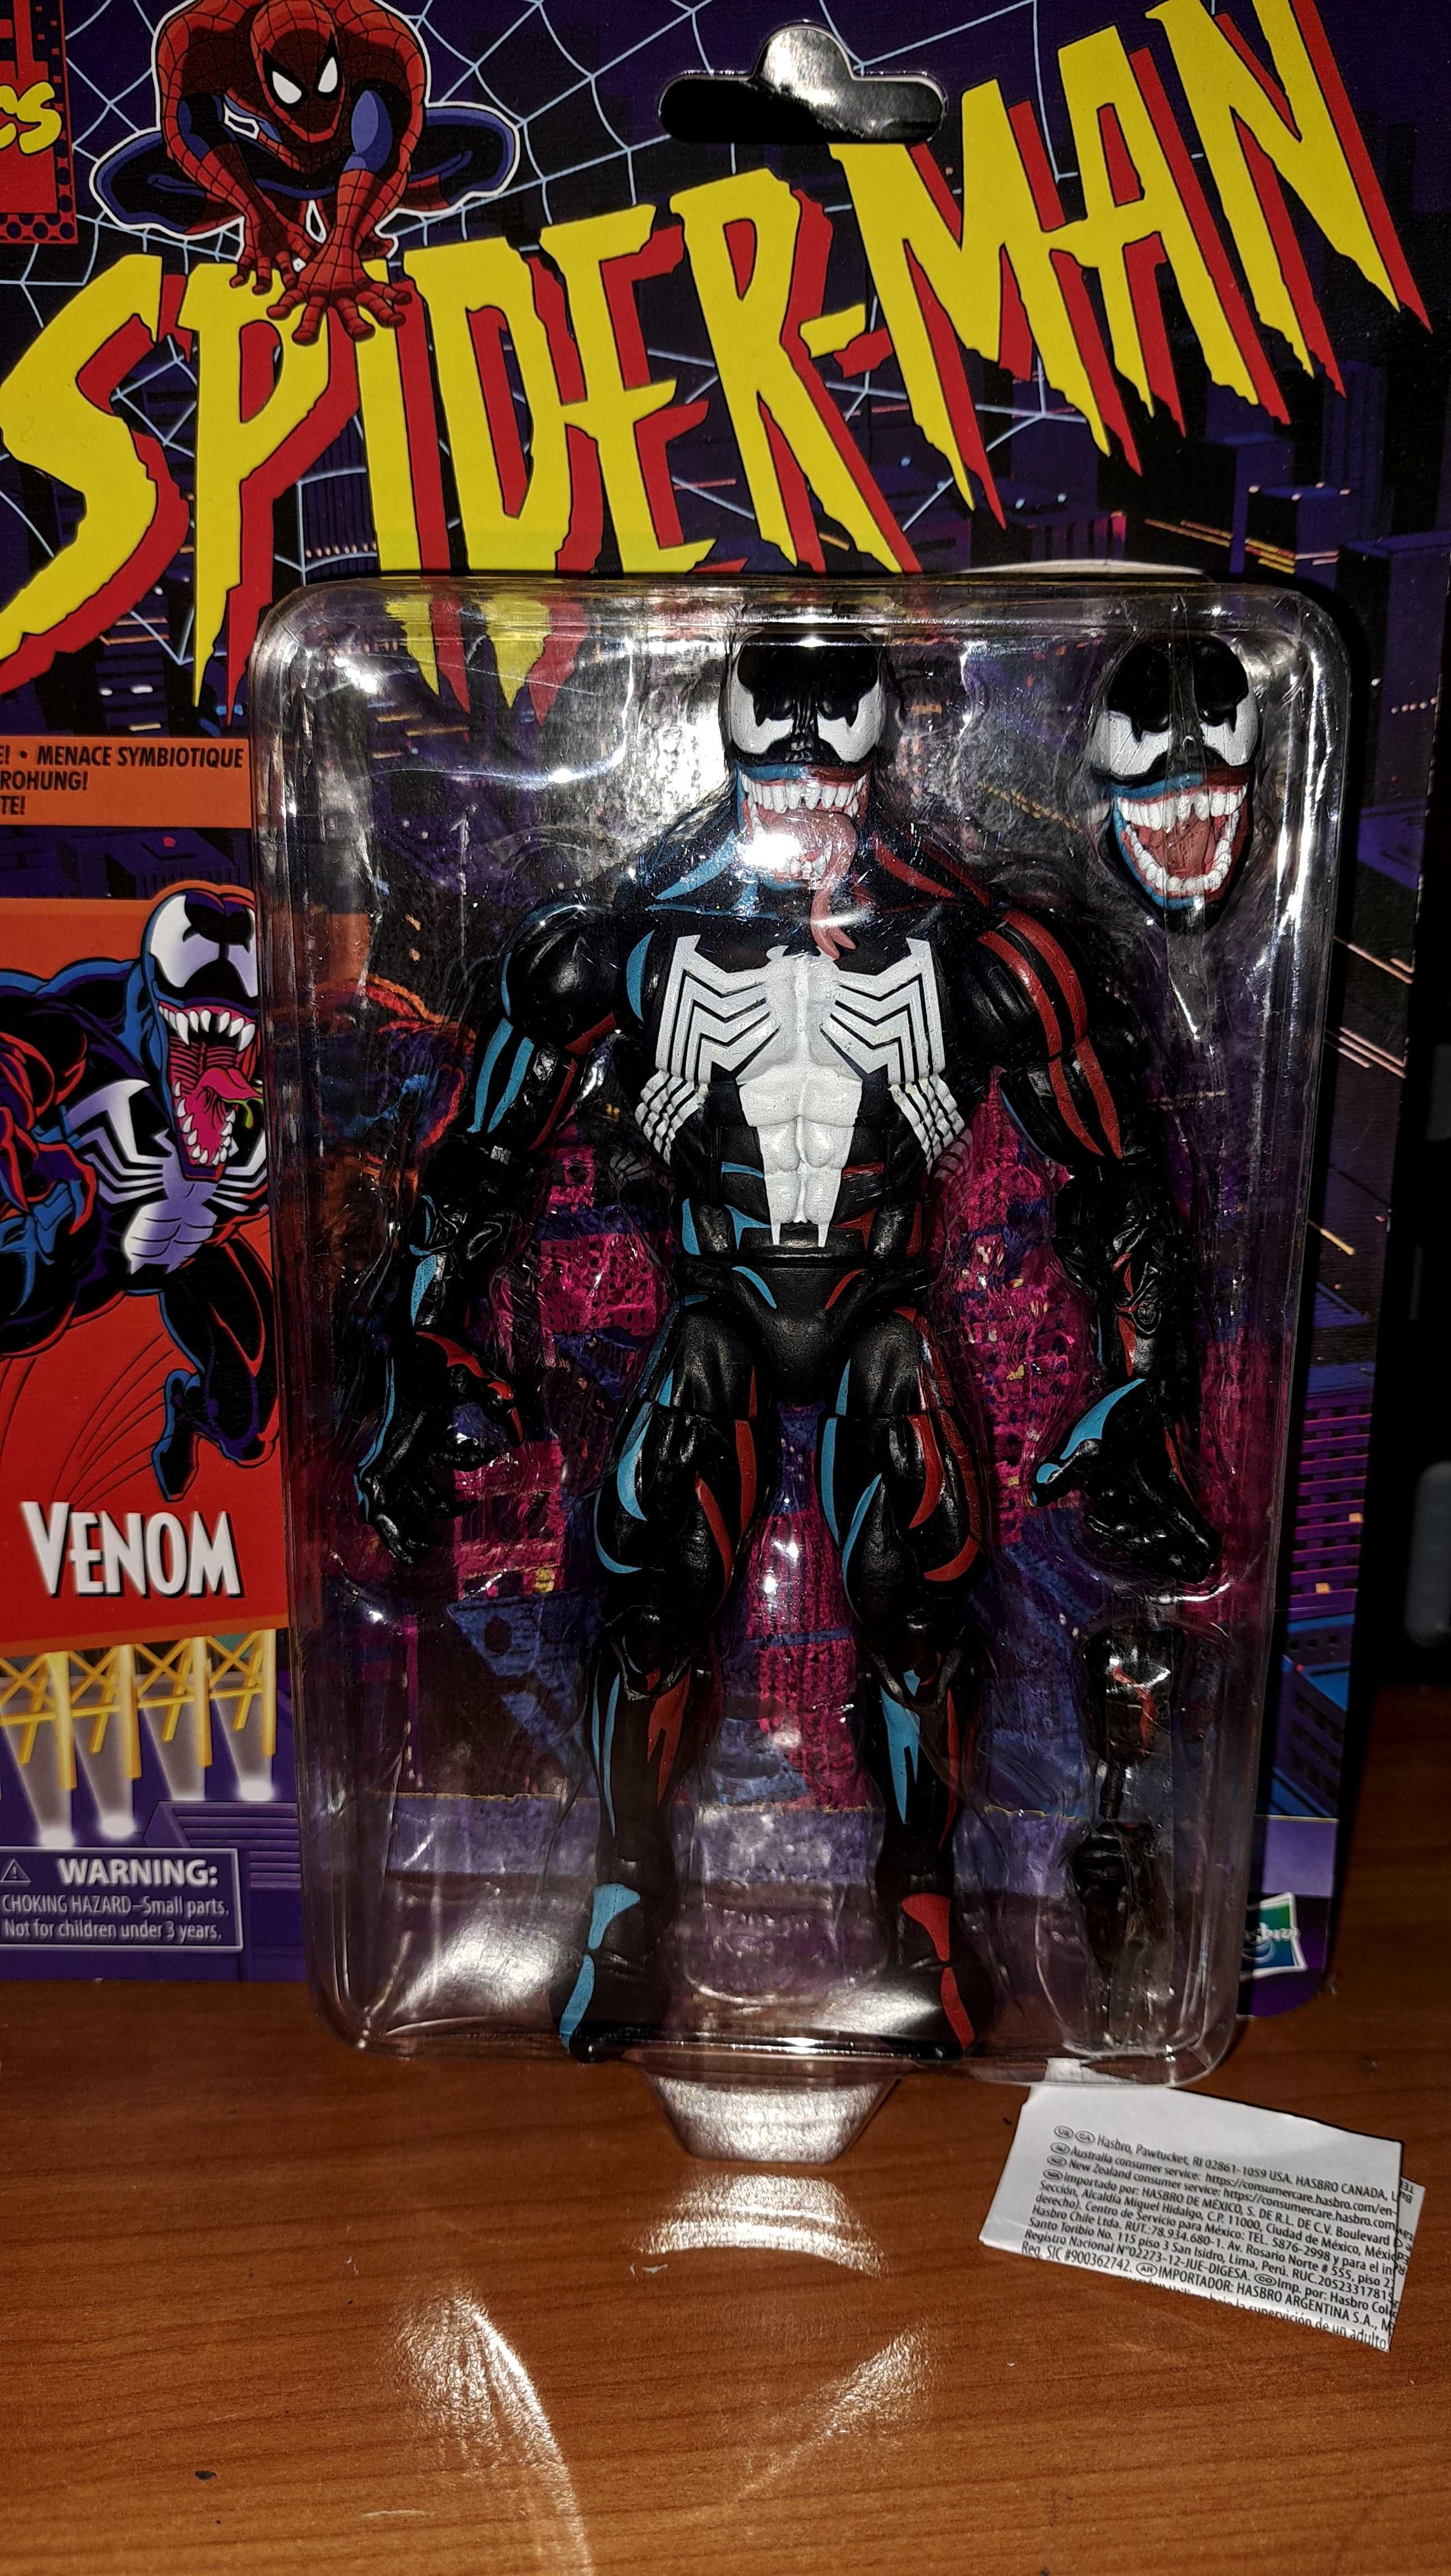 Figurina Venom marvel legends retro spider-man